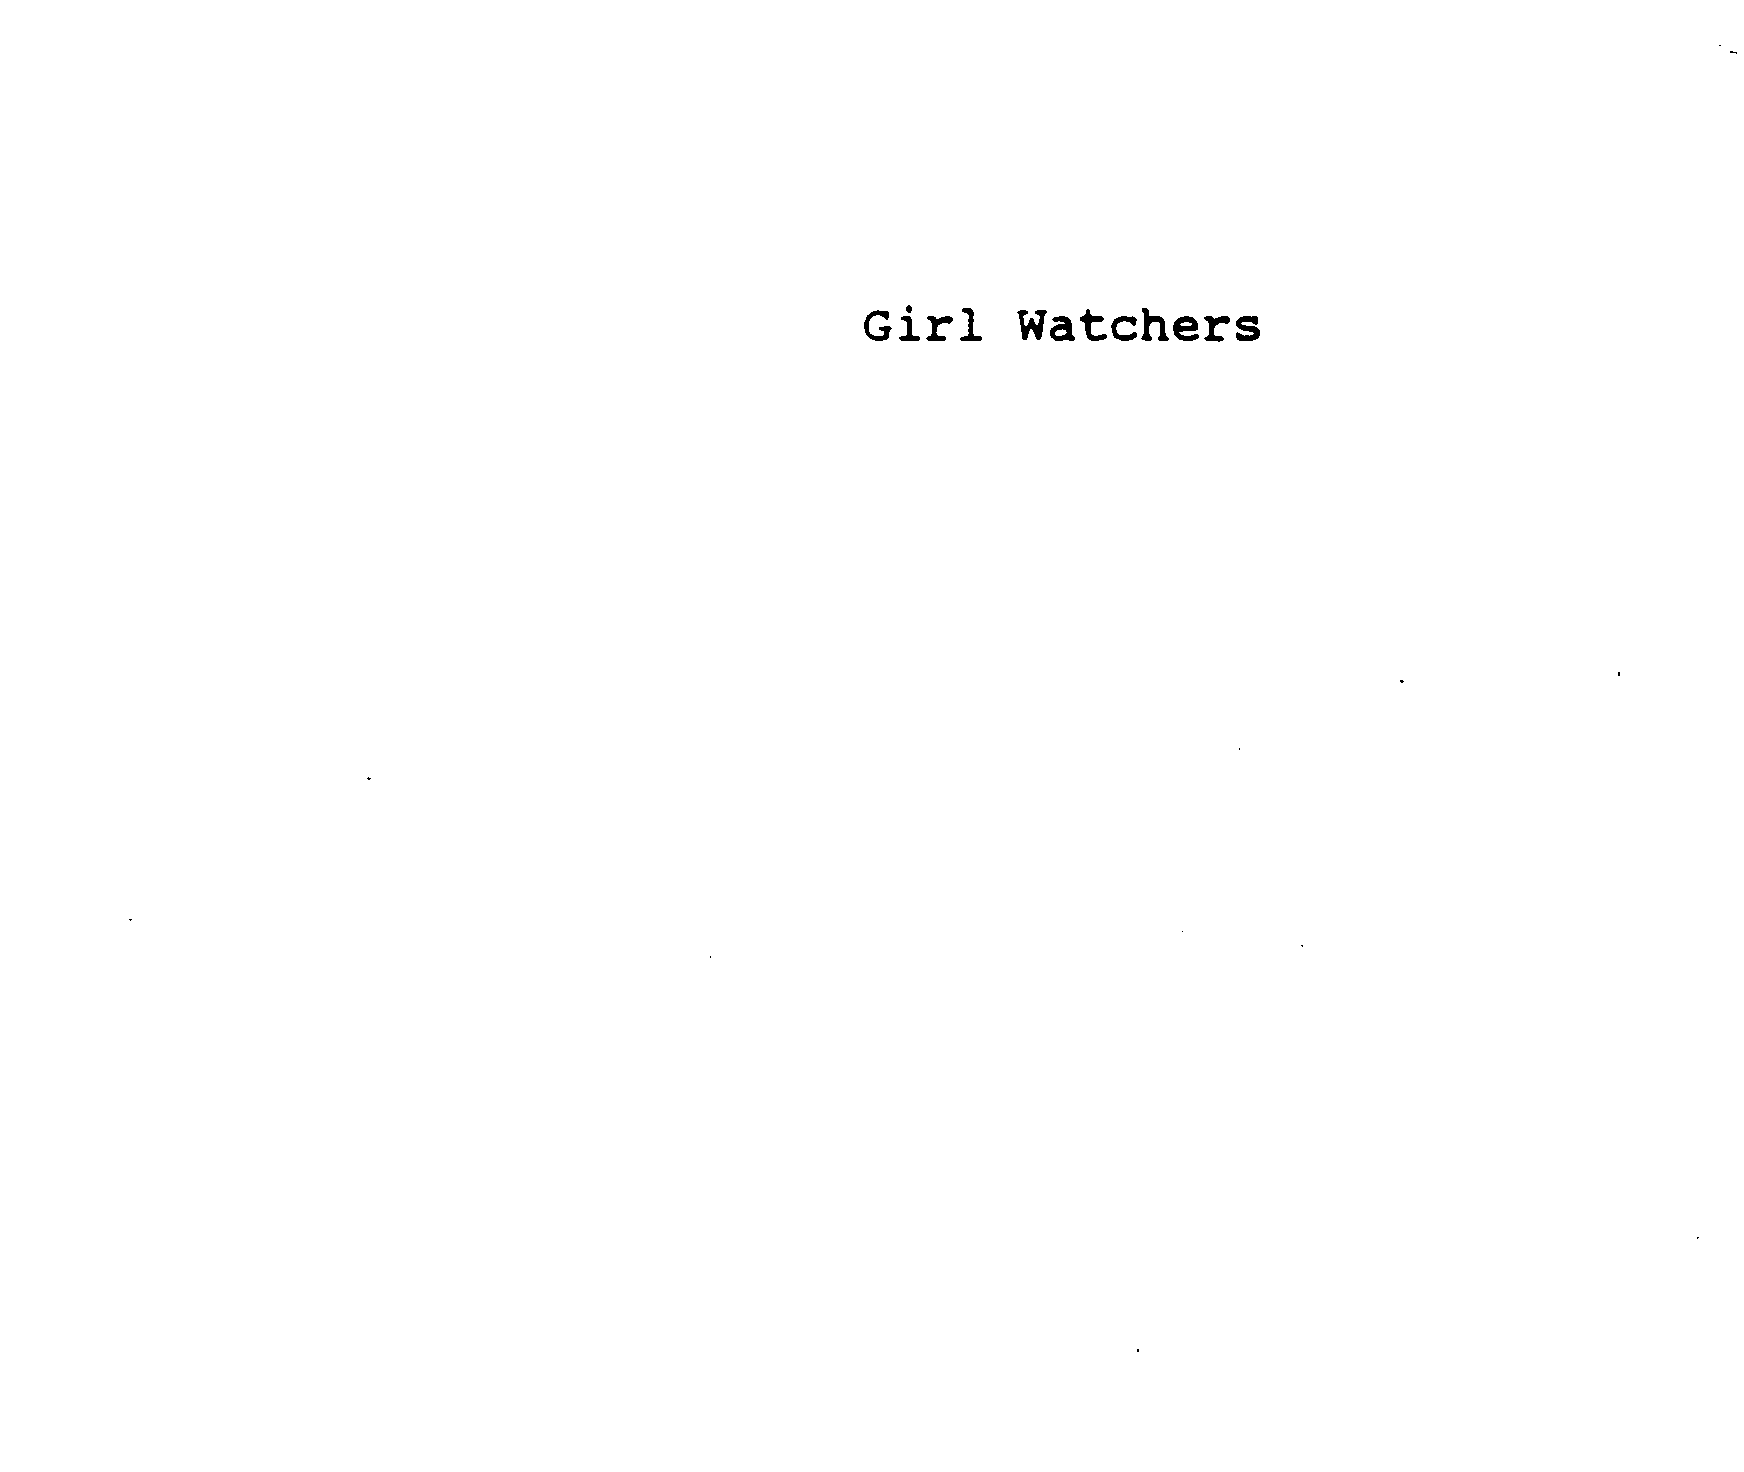 GIRL WATCHERS